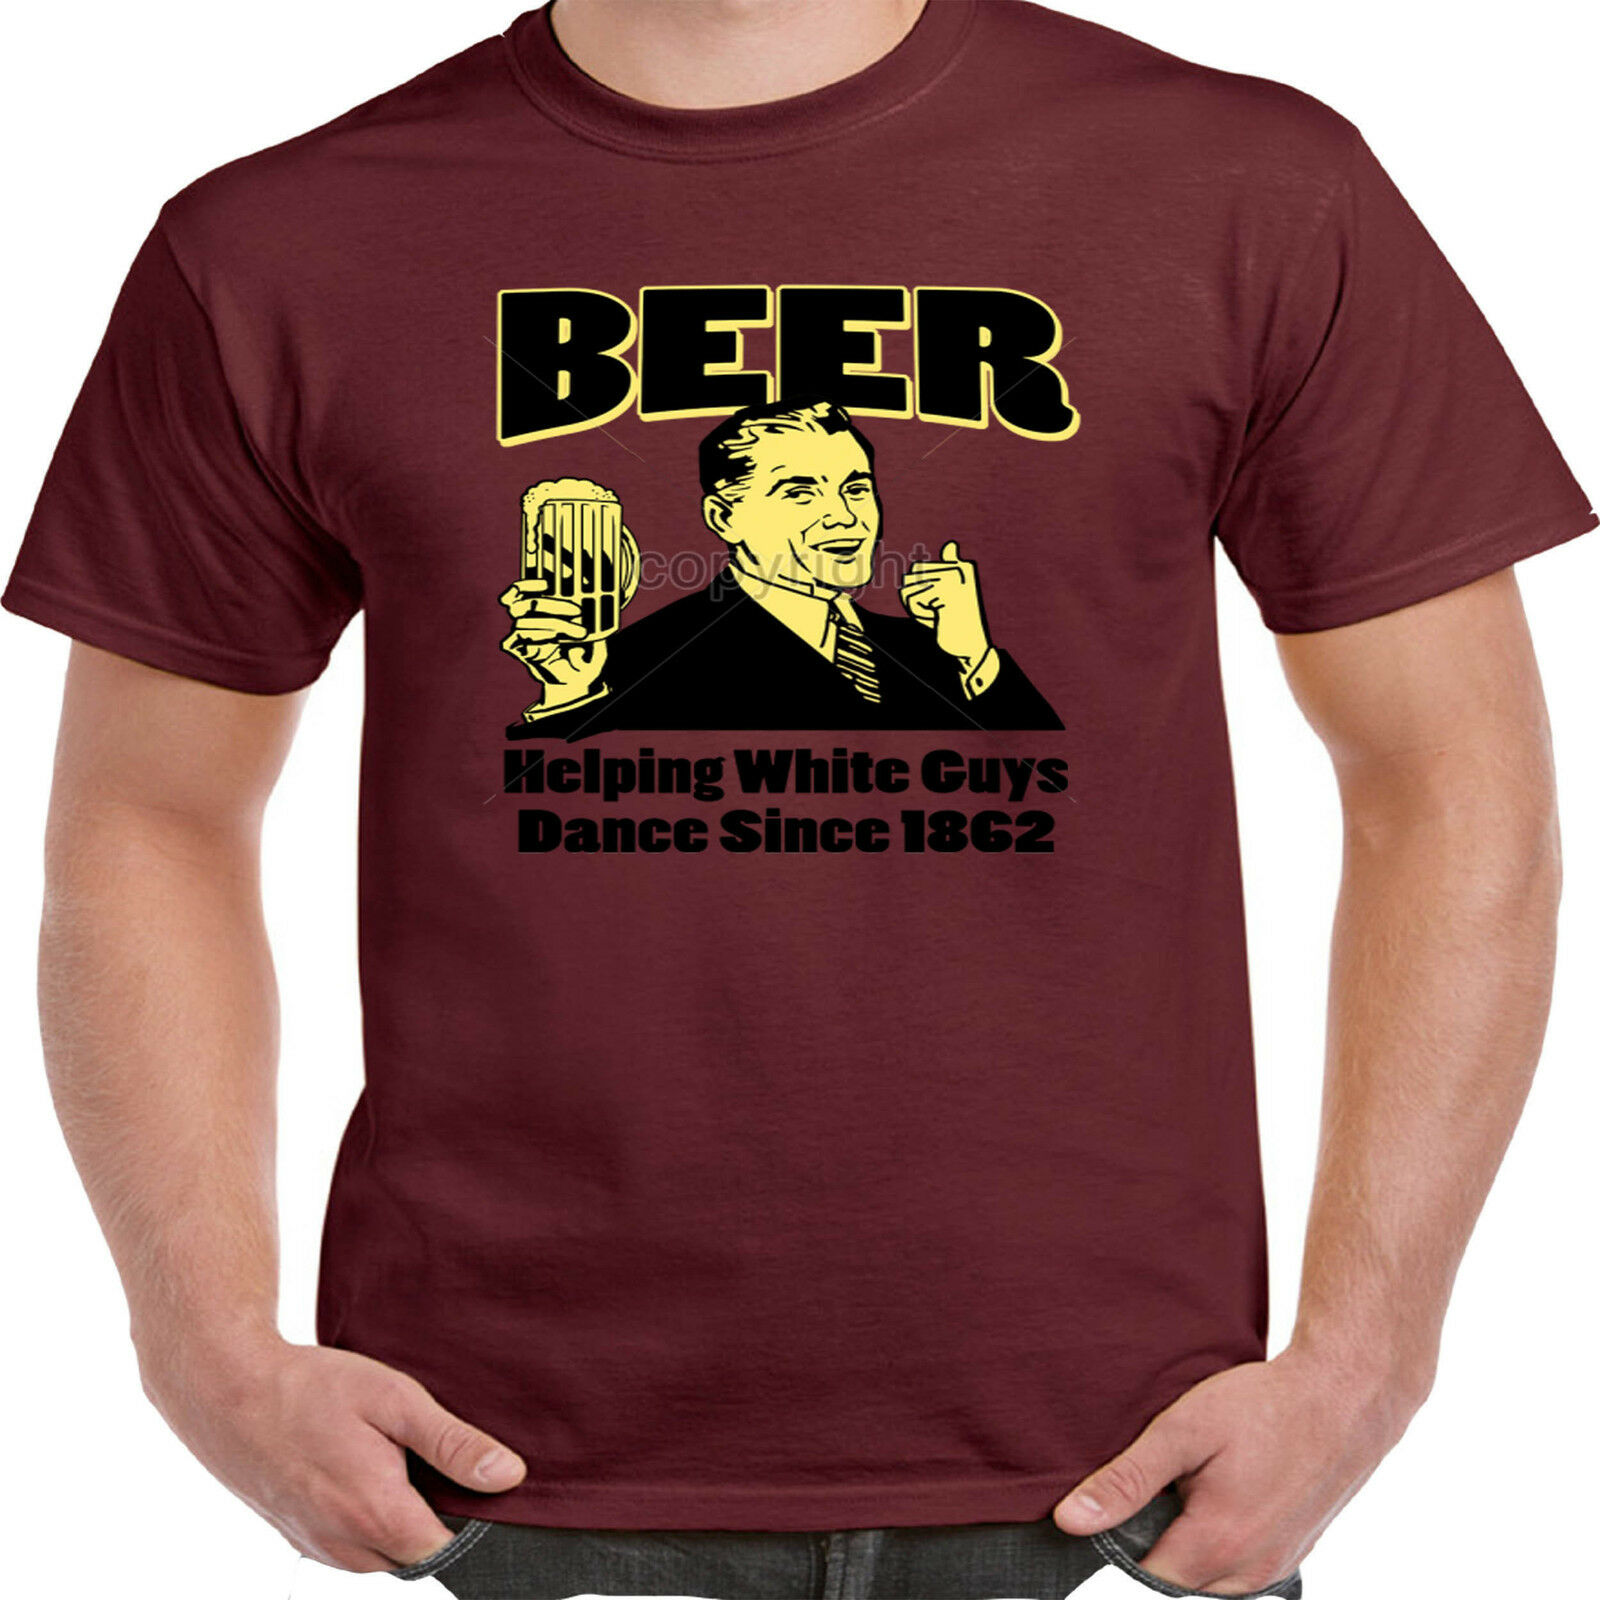 Mens Funny T Shirt SOCIAL DISTANCING Slogan Pub Drinking Novelty Joke Tshirts 